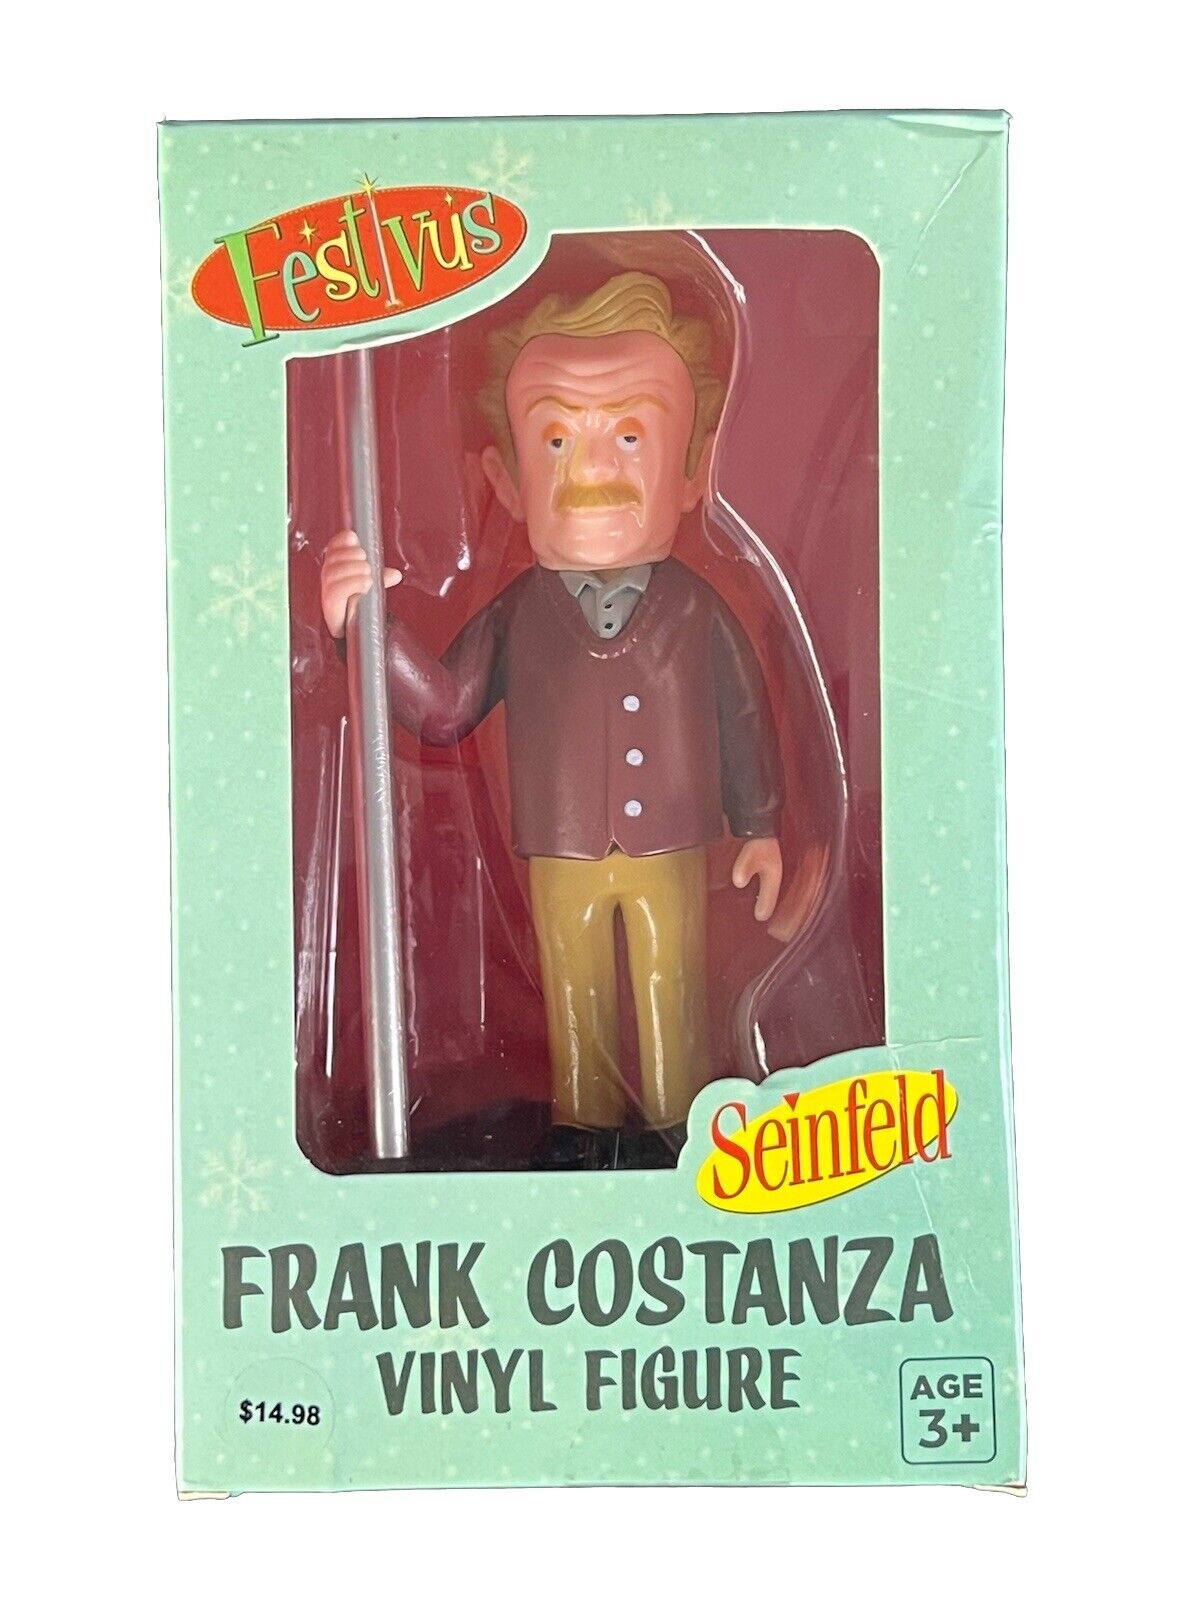 Seinfeld Frank Costanza Vinyl Figure Holding Festivus Pole - Brand New